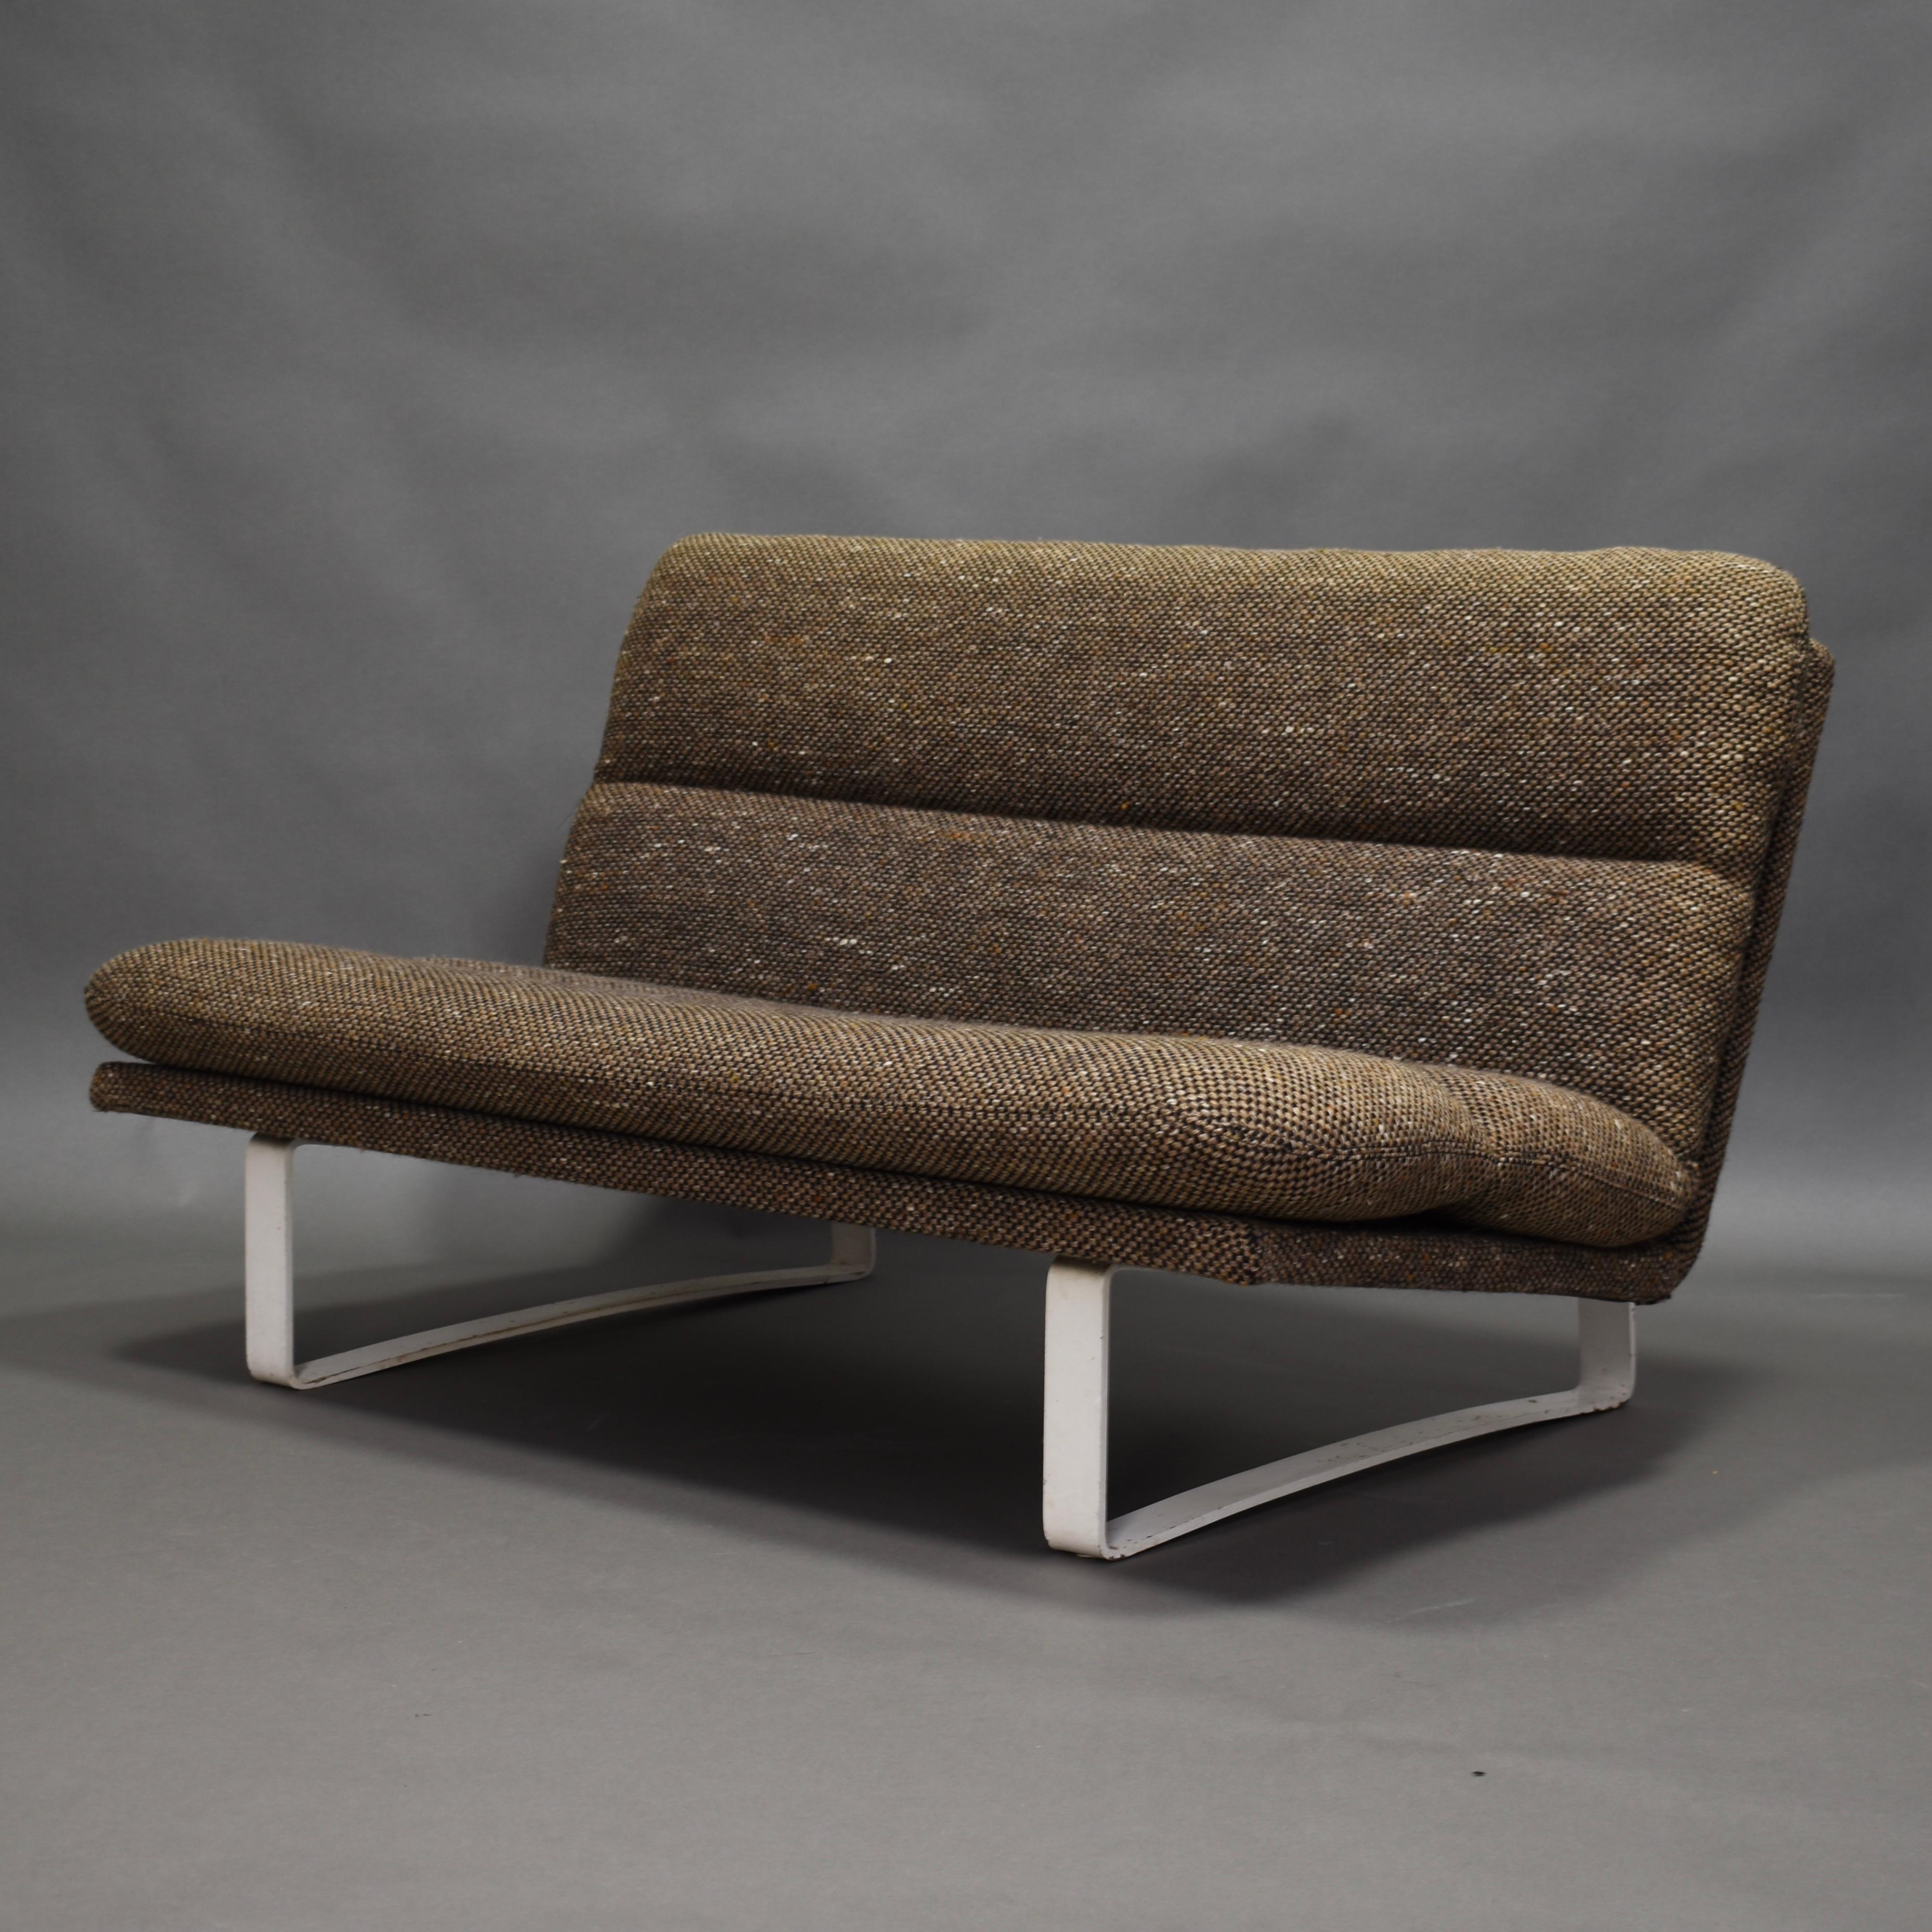 Dutch Kho Liang Ie Two-Seat Sofa for Artifort, Netherlands, circa 1968